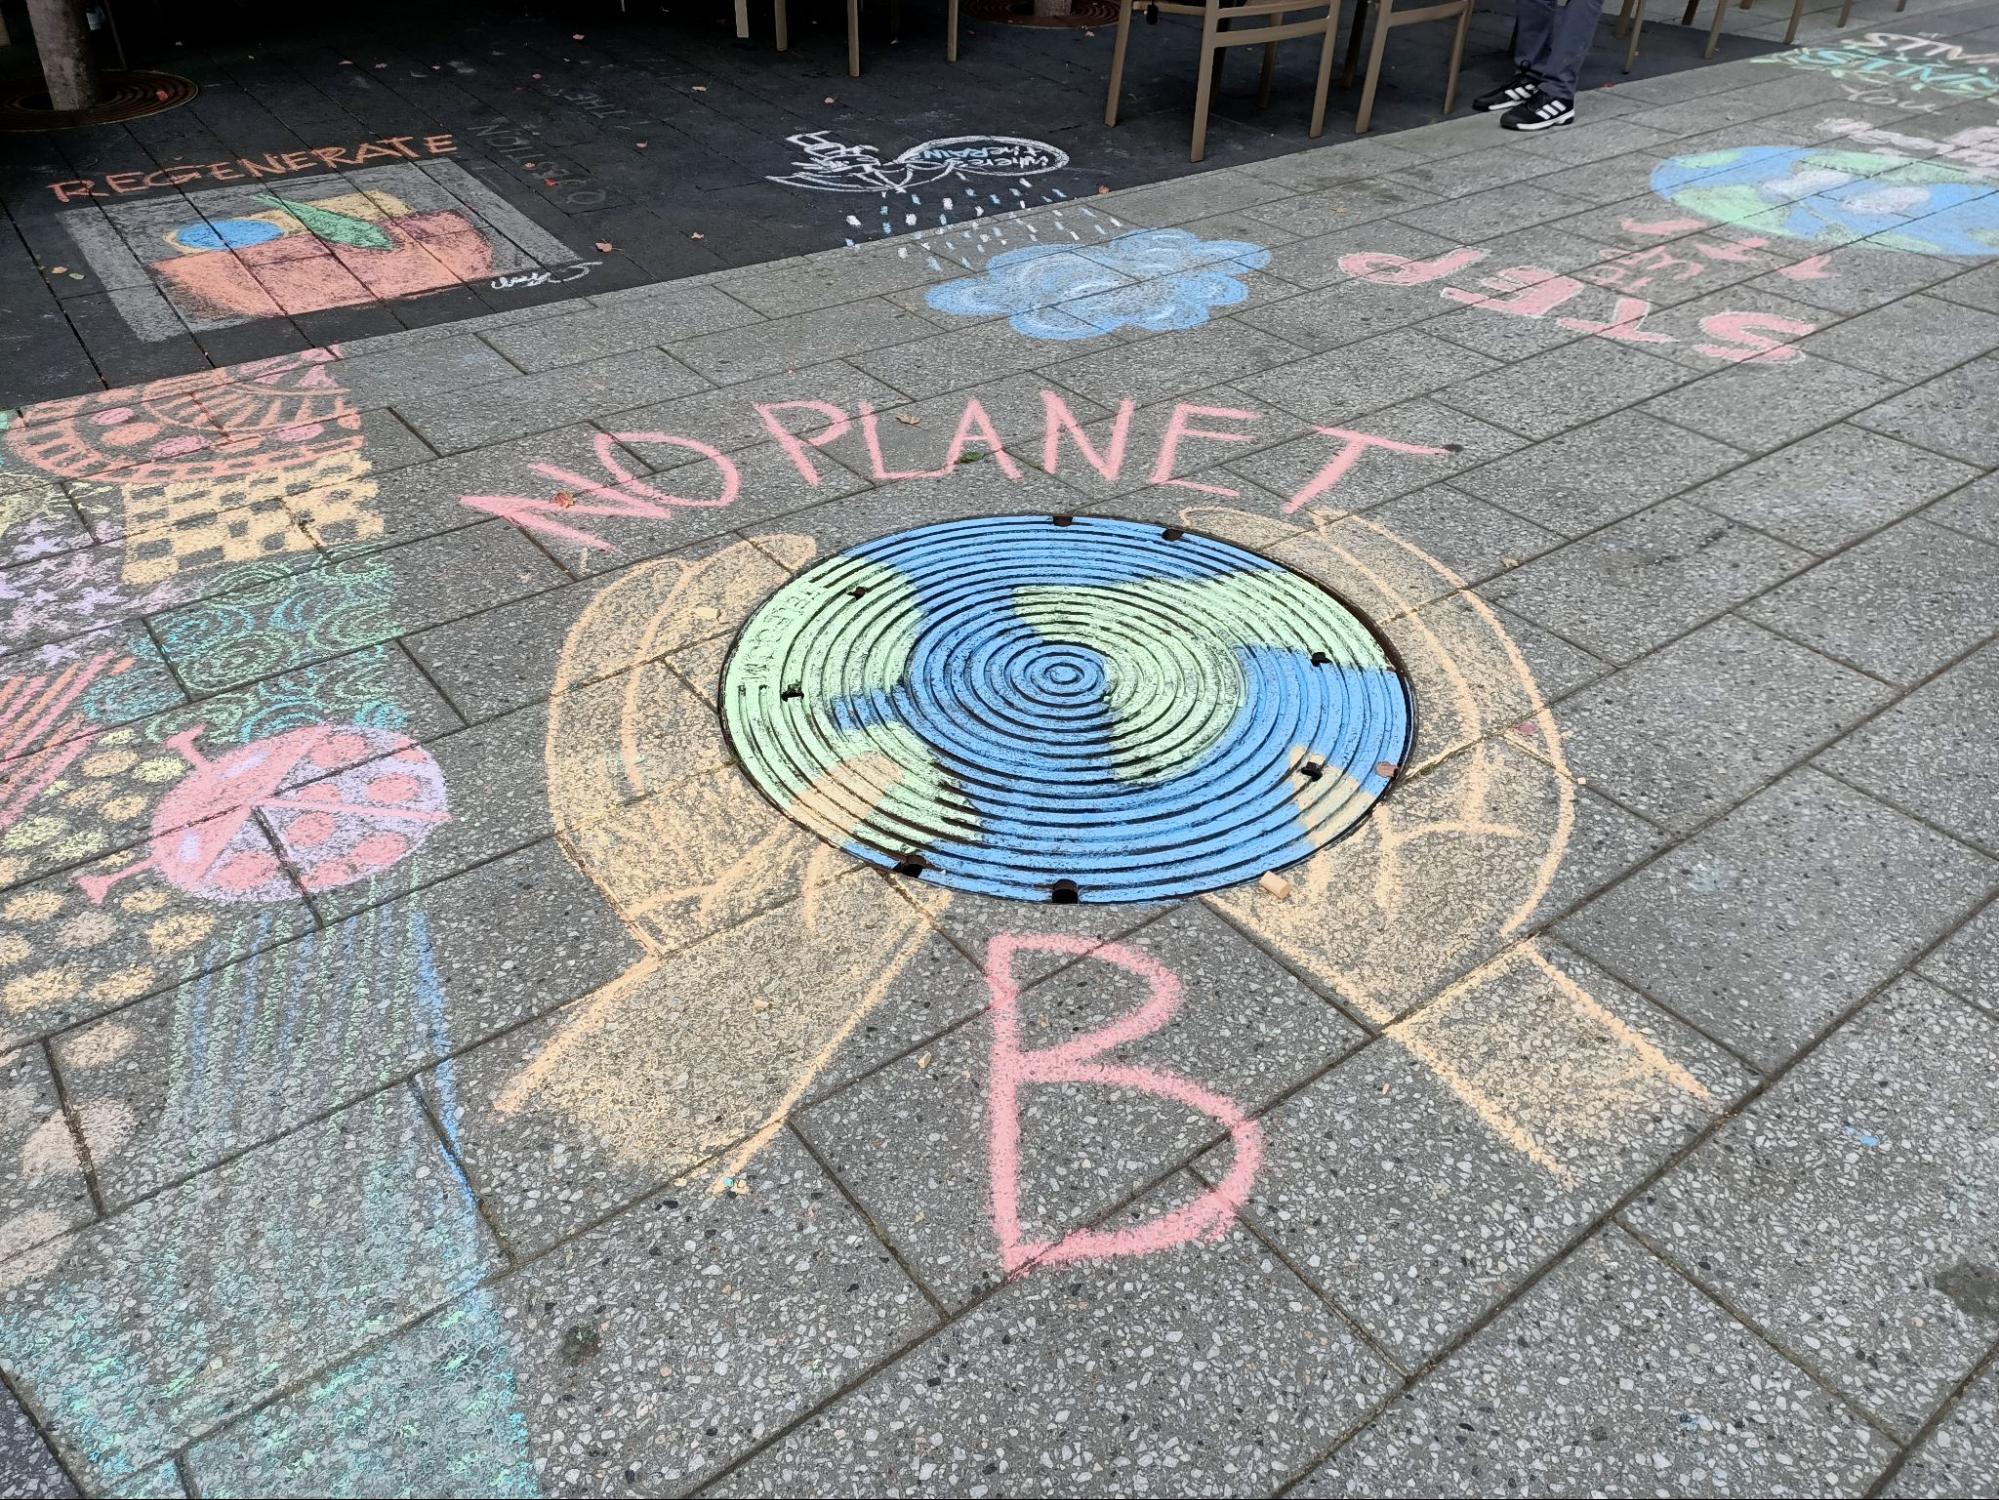 Chalk drawing that says "no planet B"